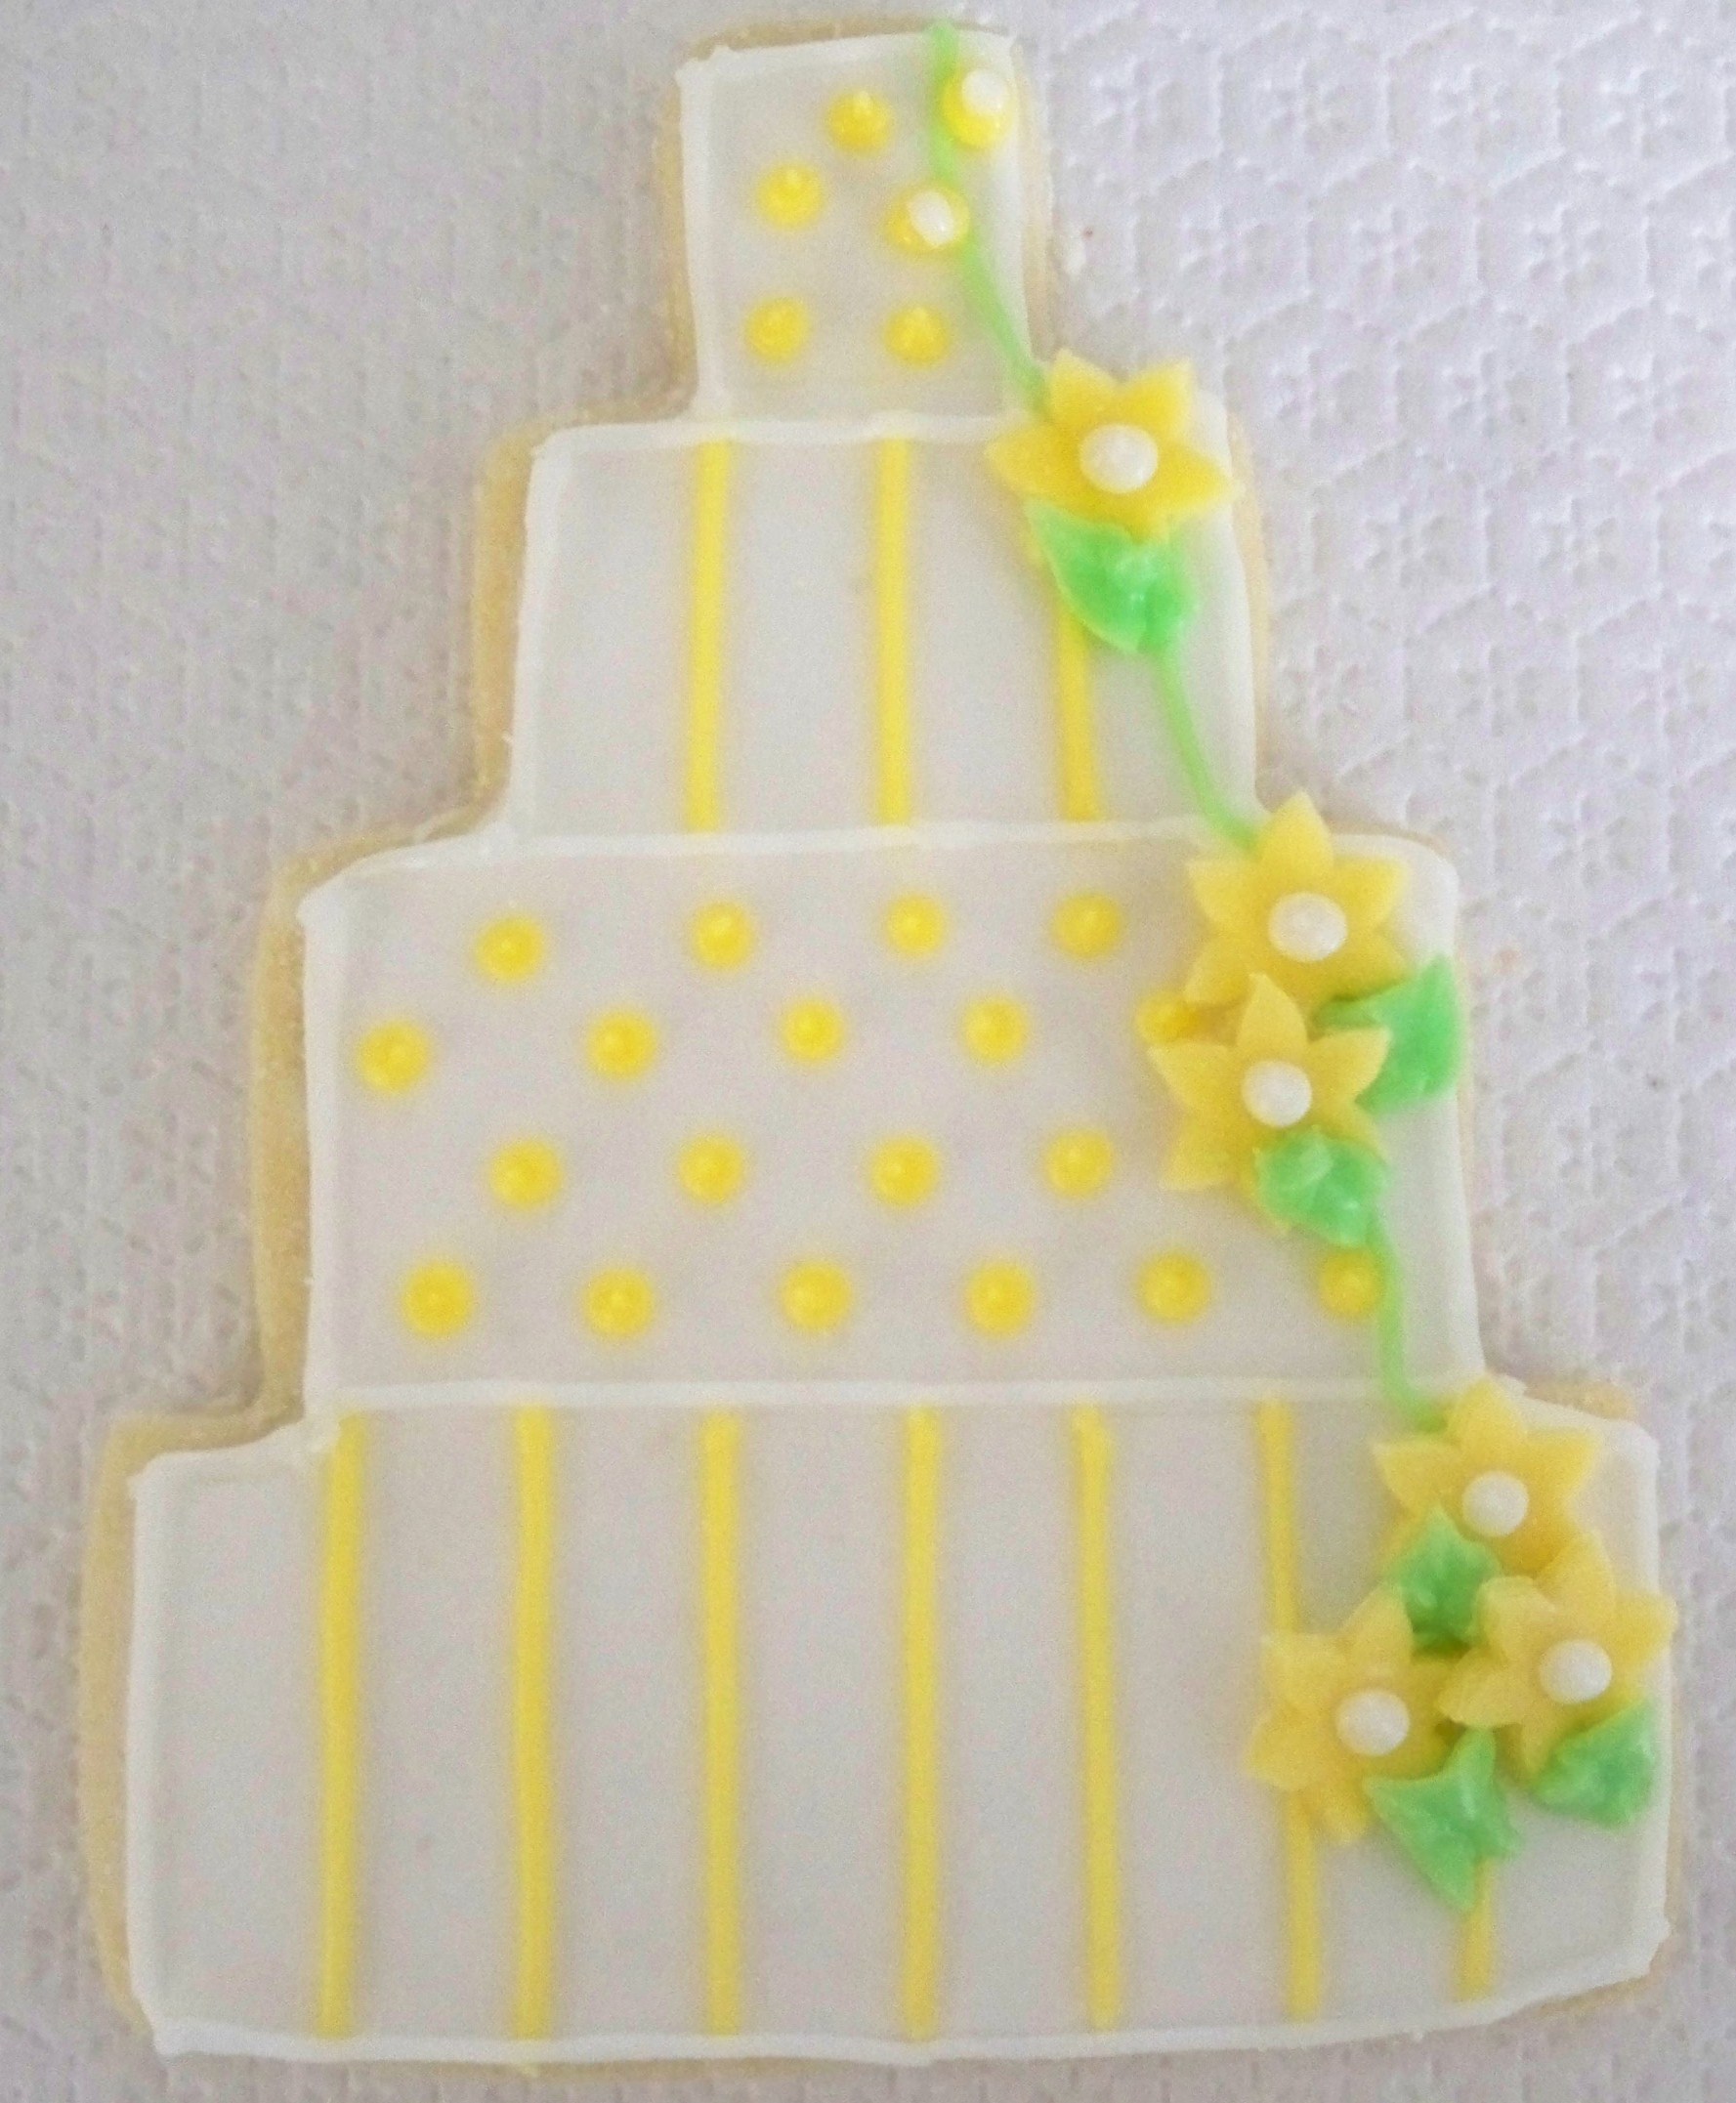 (9)Daisy Wedding Cake
